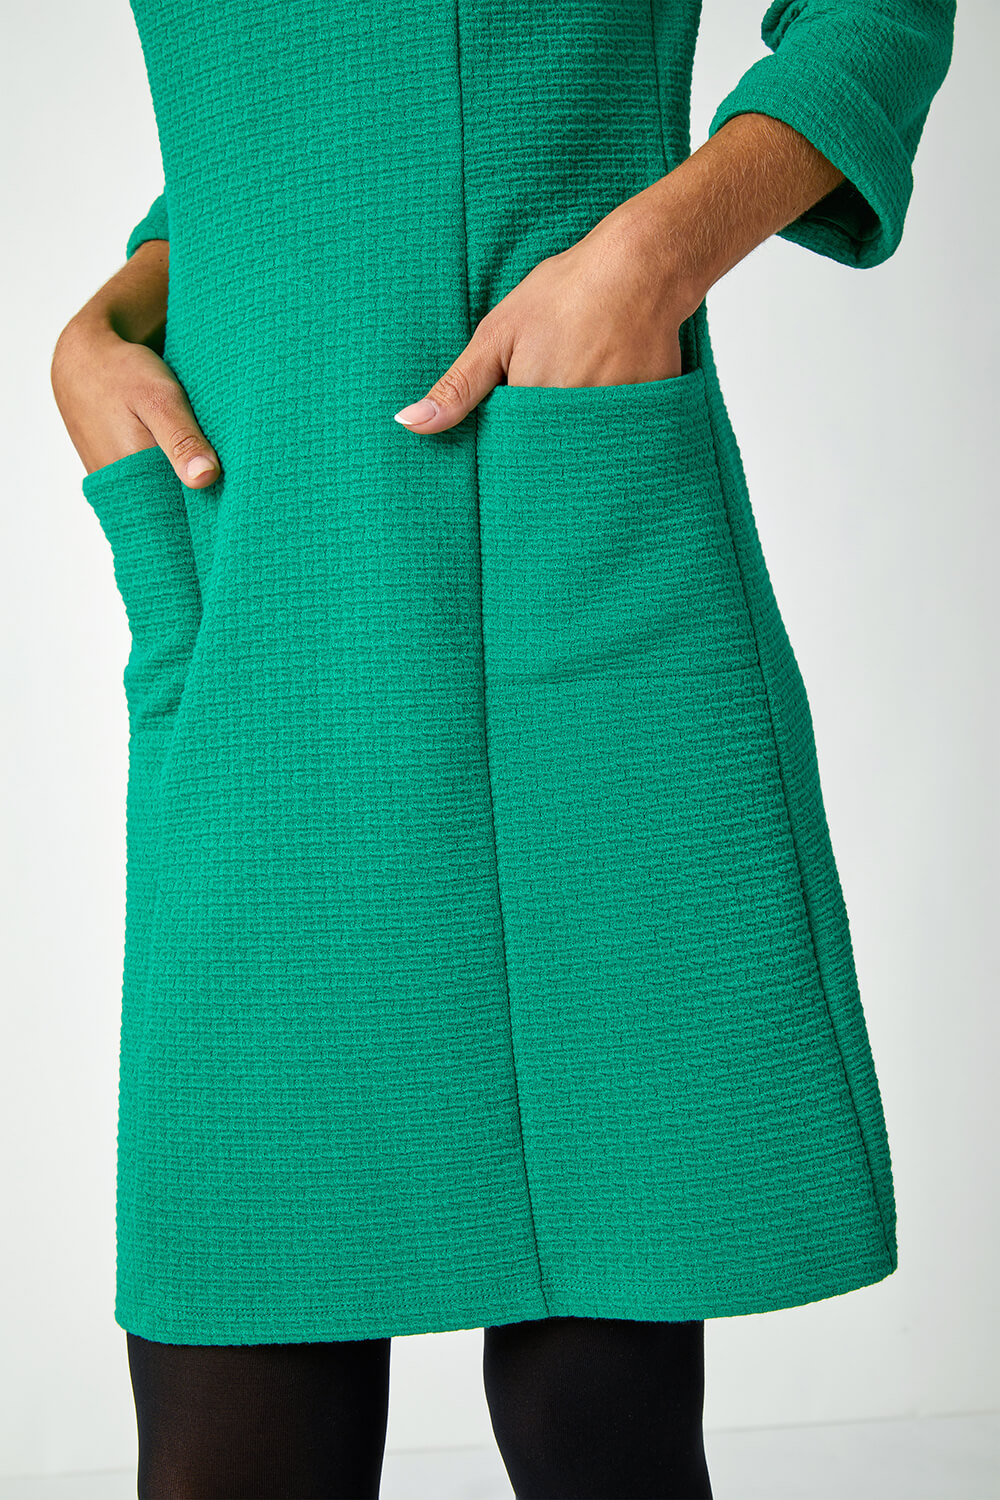 Green Textured Pocket Cotton Blend Shift Dress, Image 5 of 5